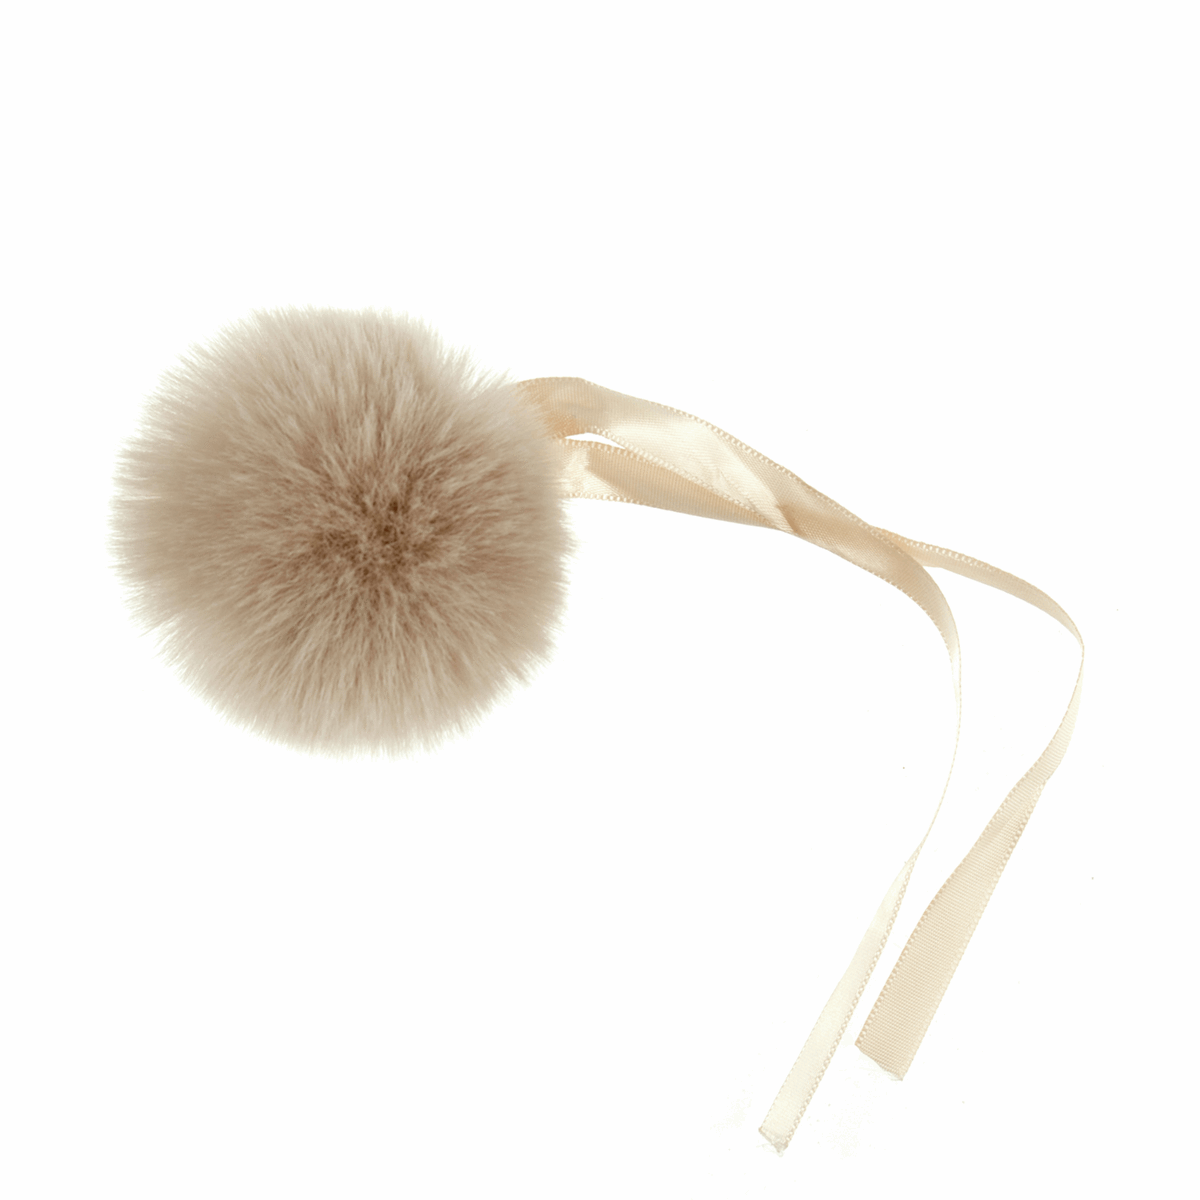 Trimits Faux Fur Super Fluffy Pom Pom - Natural 6cm (Medium)